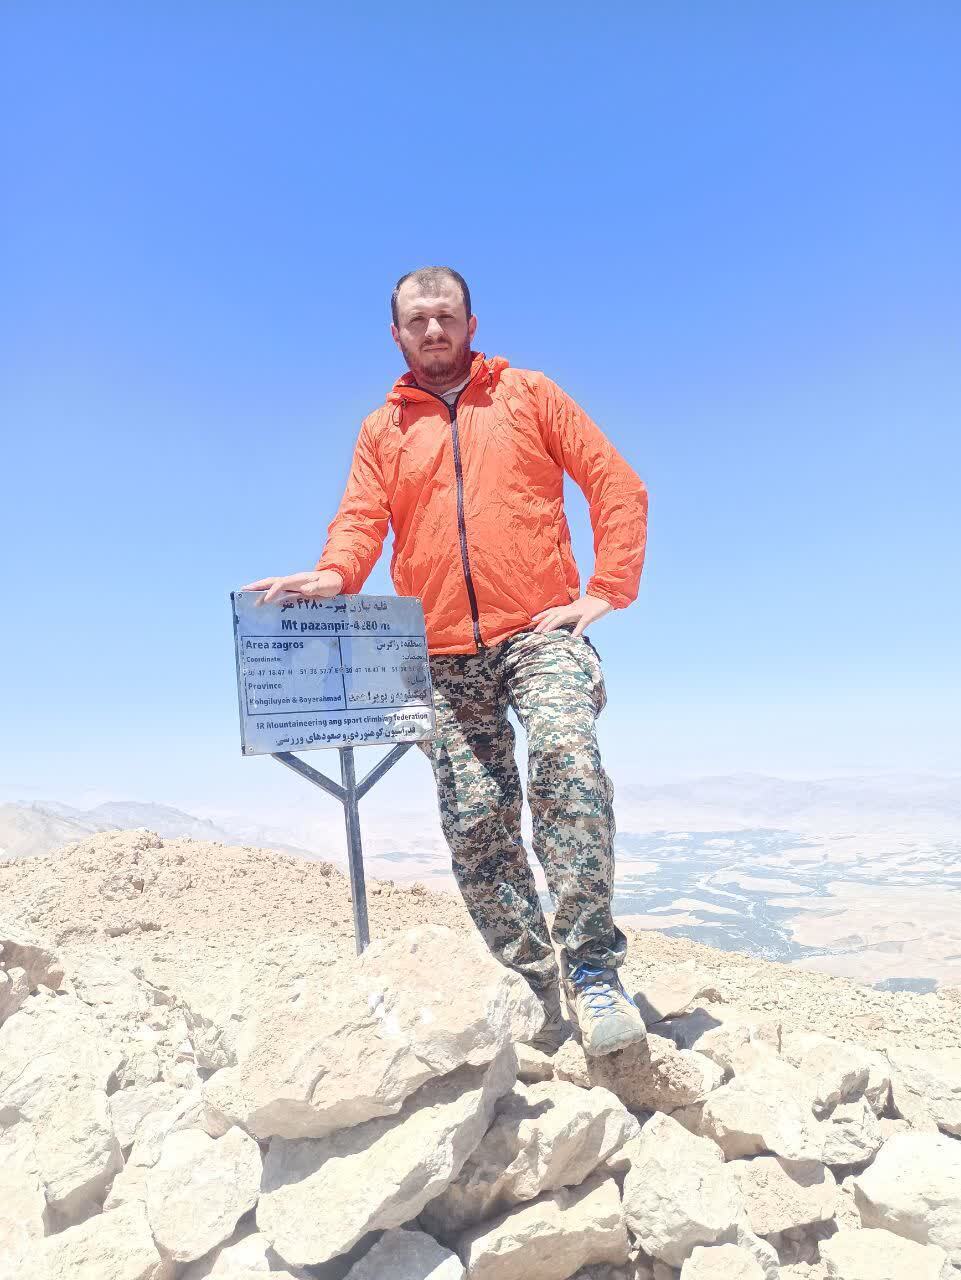 صعود تیم کوهنوردی سپاه فتح به قله پازن پیر منطقه زاگرس دنا